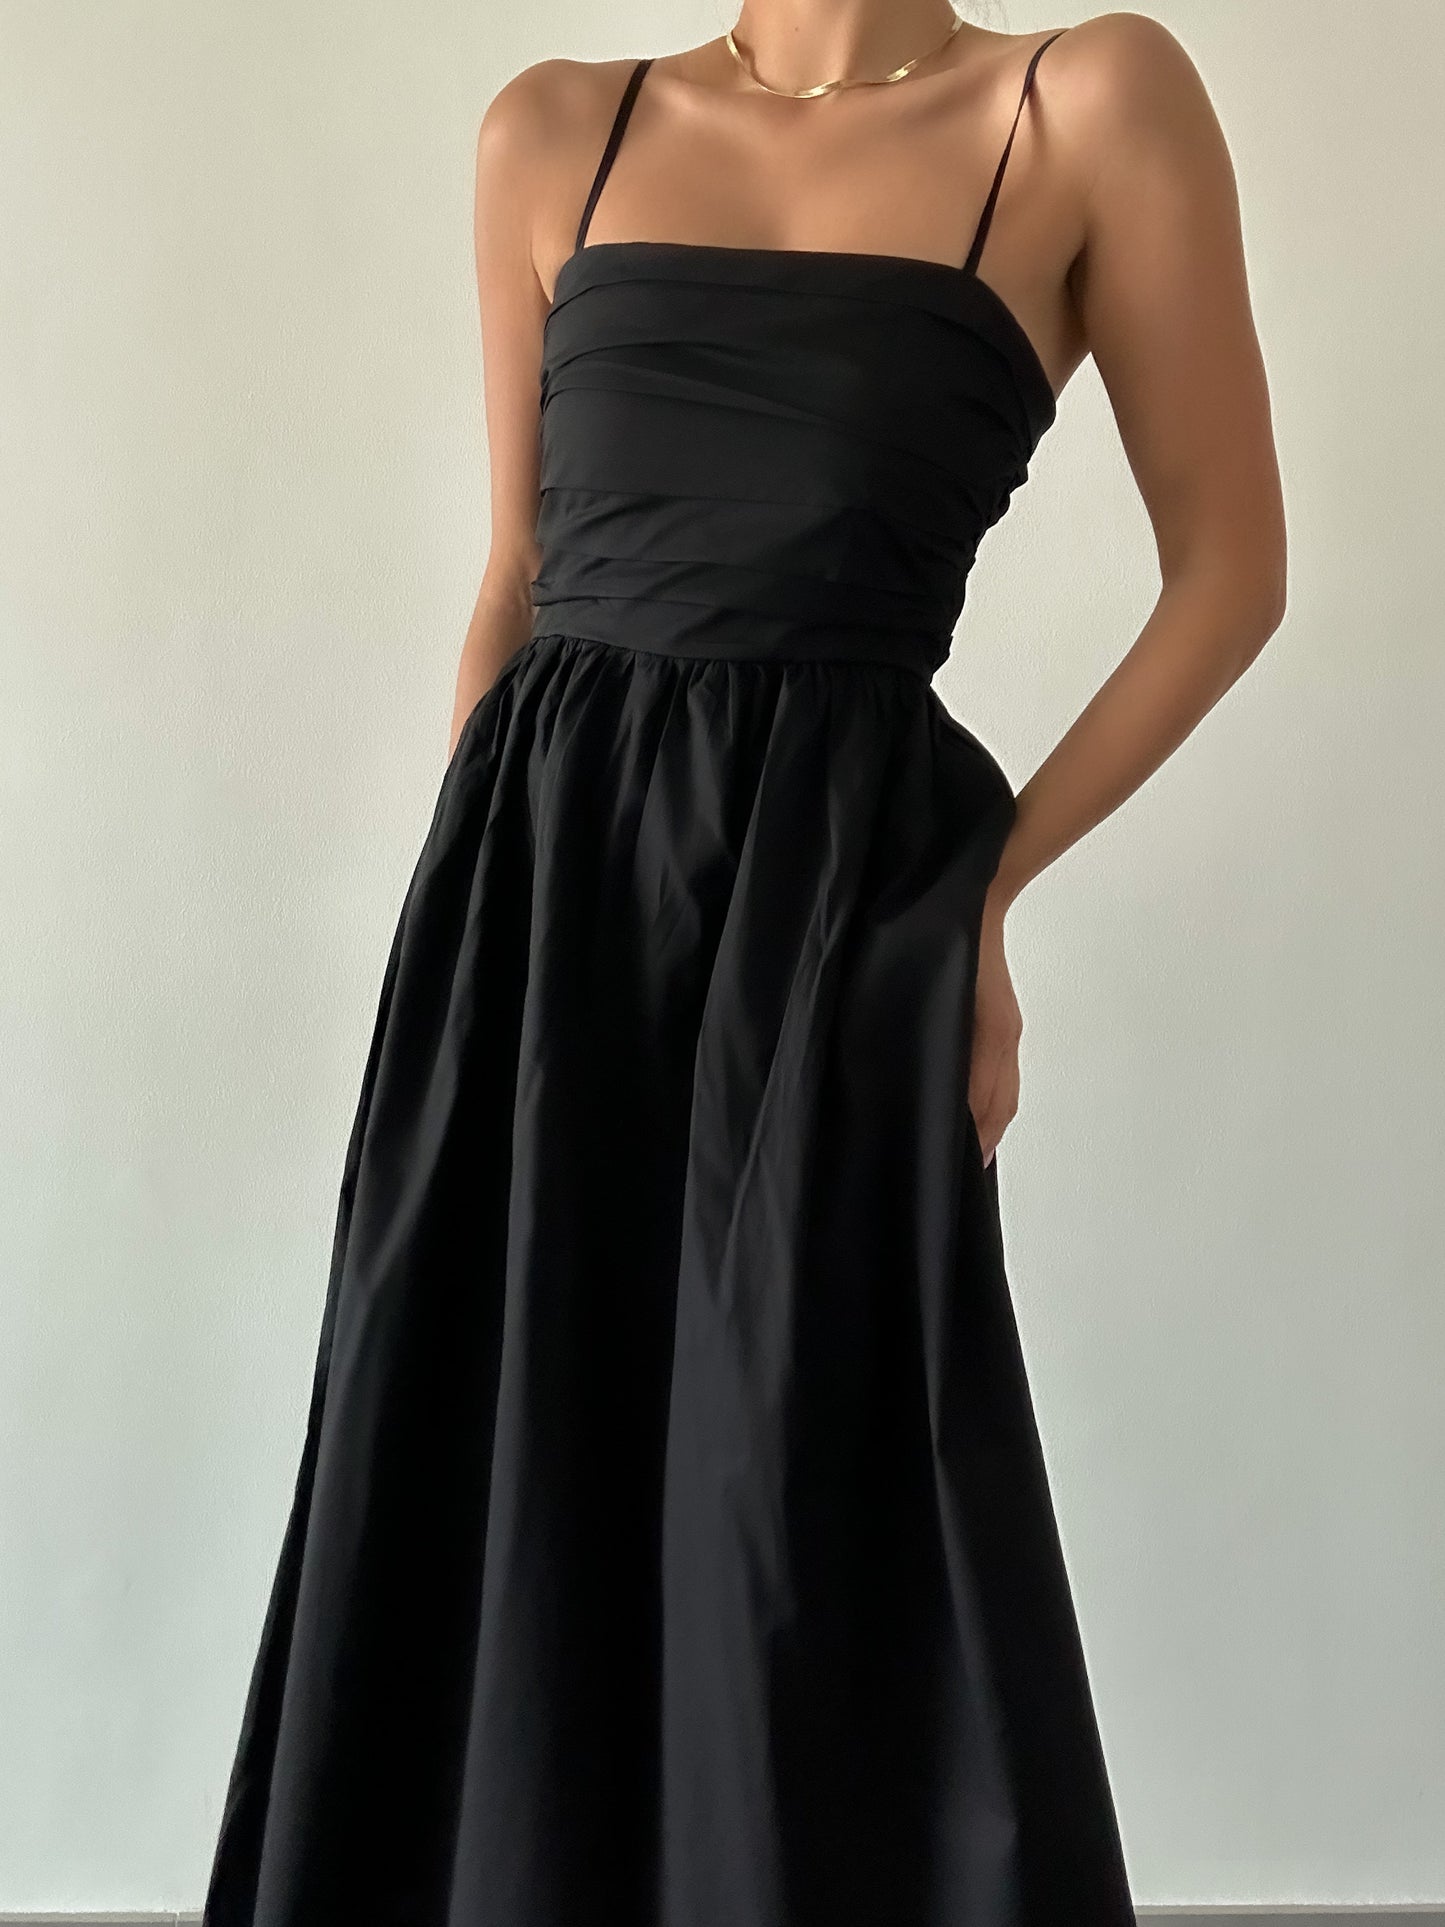 Carlie Summer Dress - Black